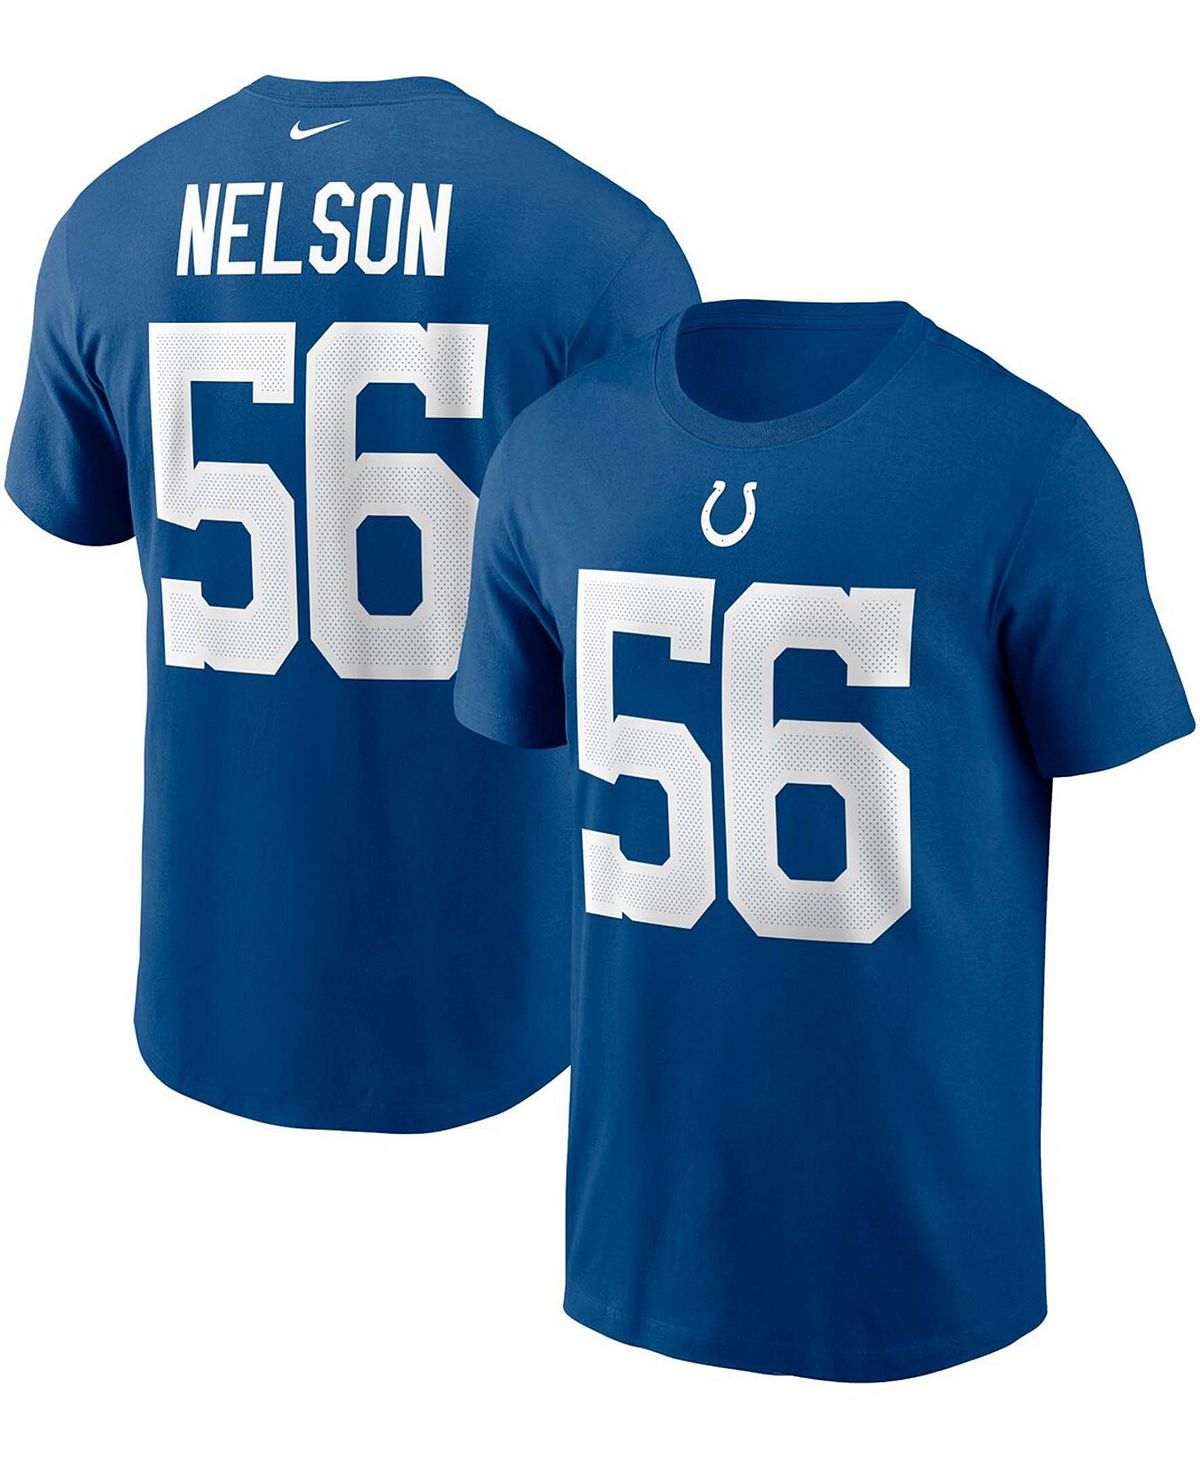 Мужская футболка quenton nelson royal indianapolis colts с именем и номером Nike